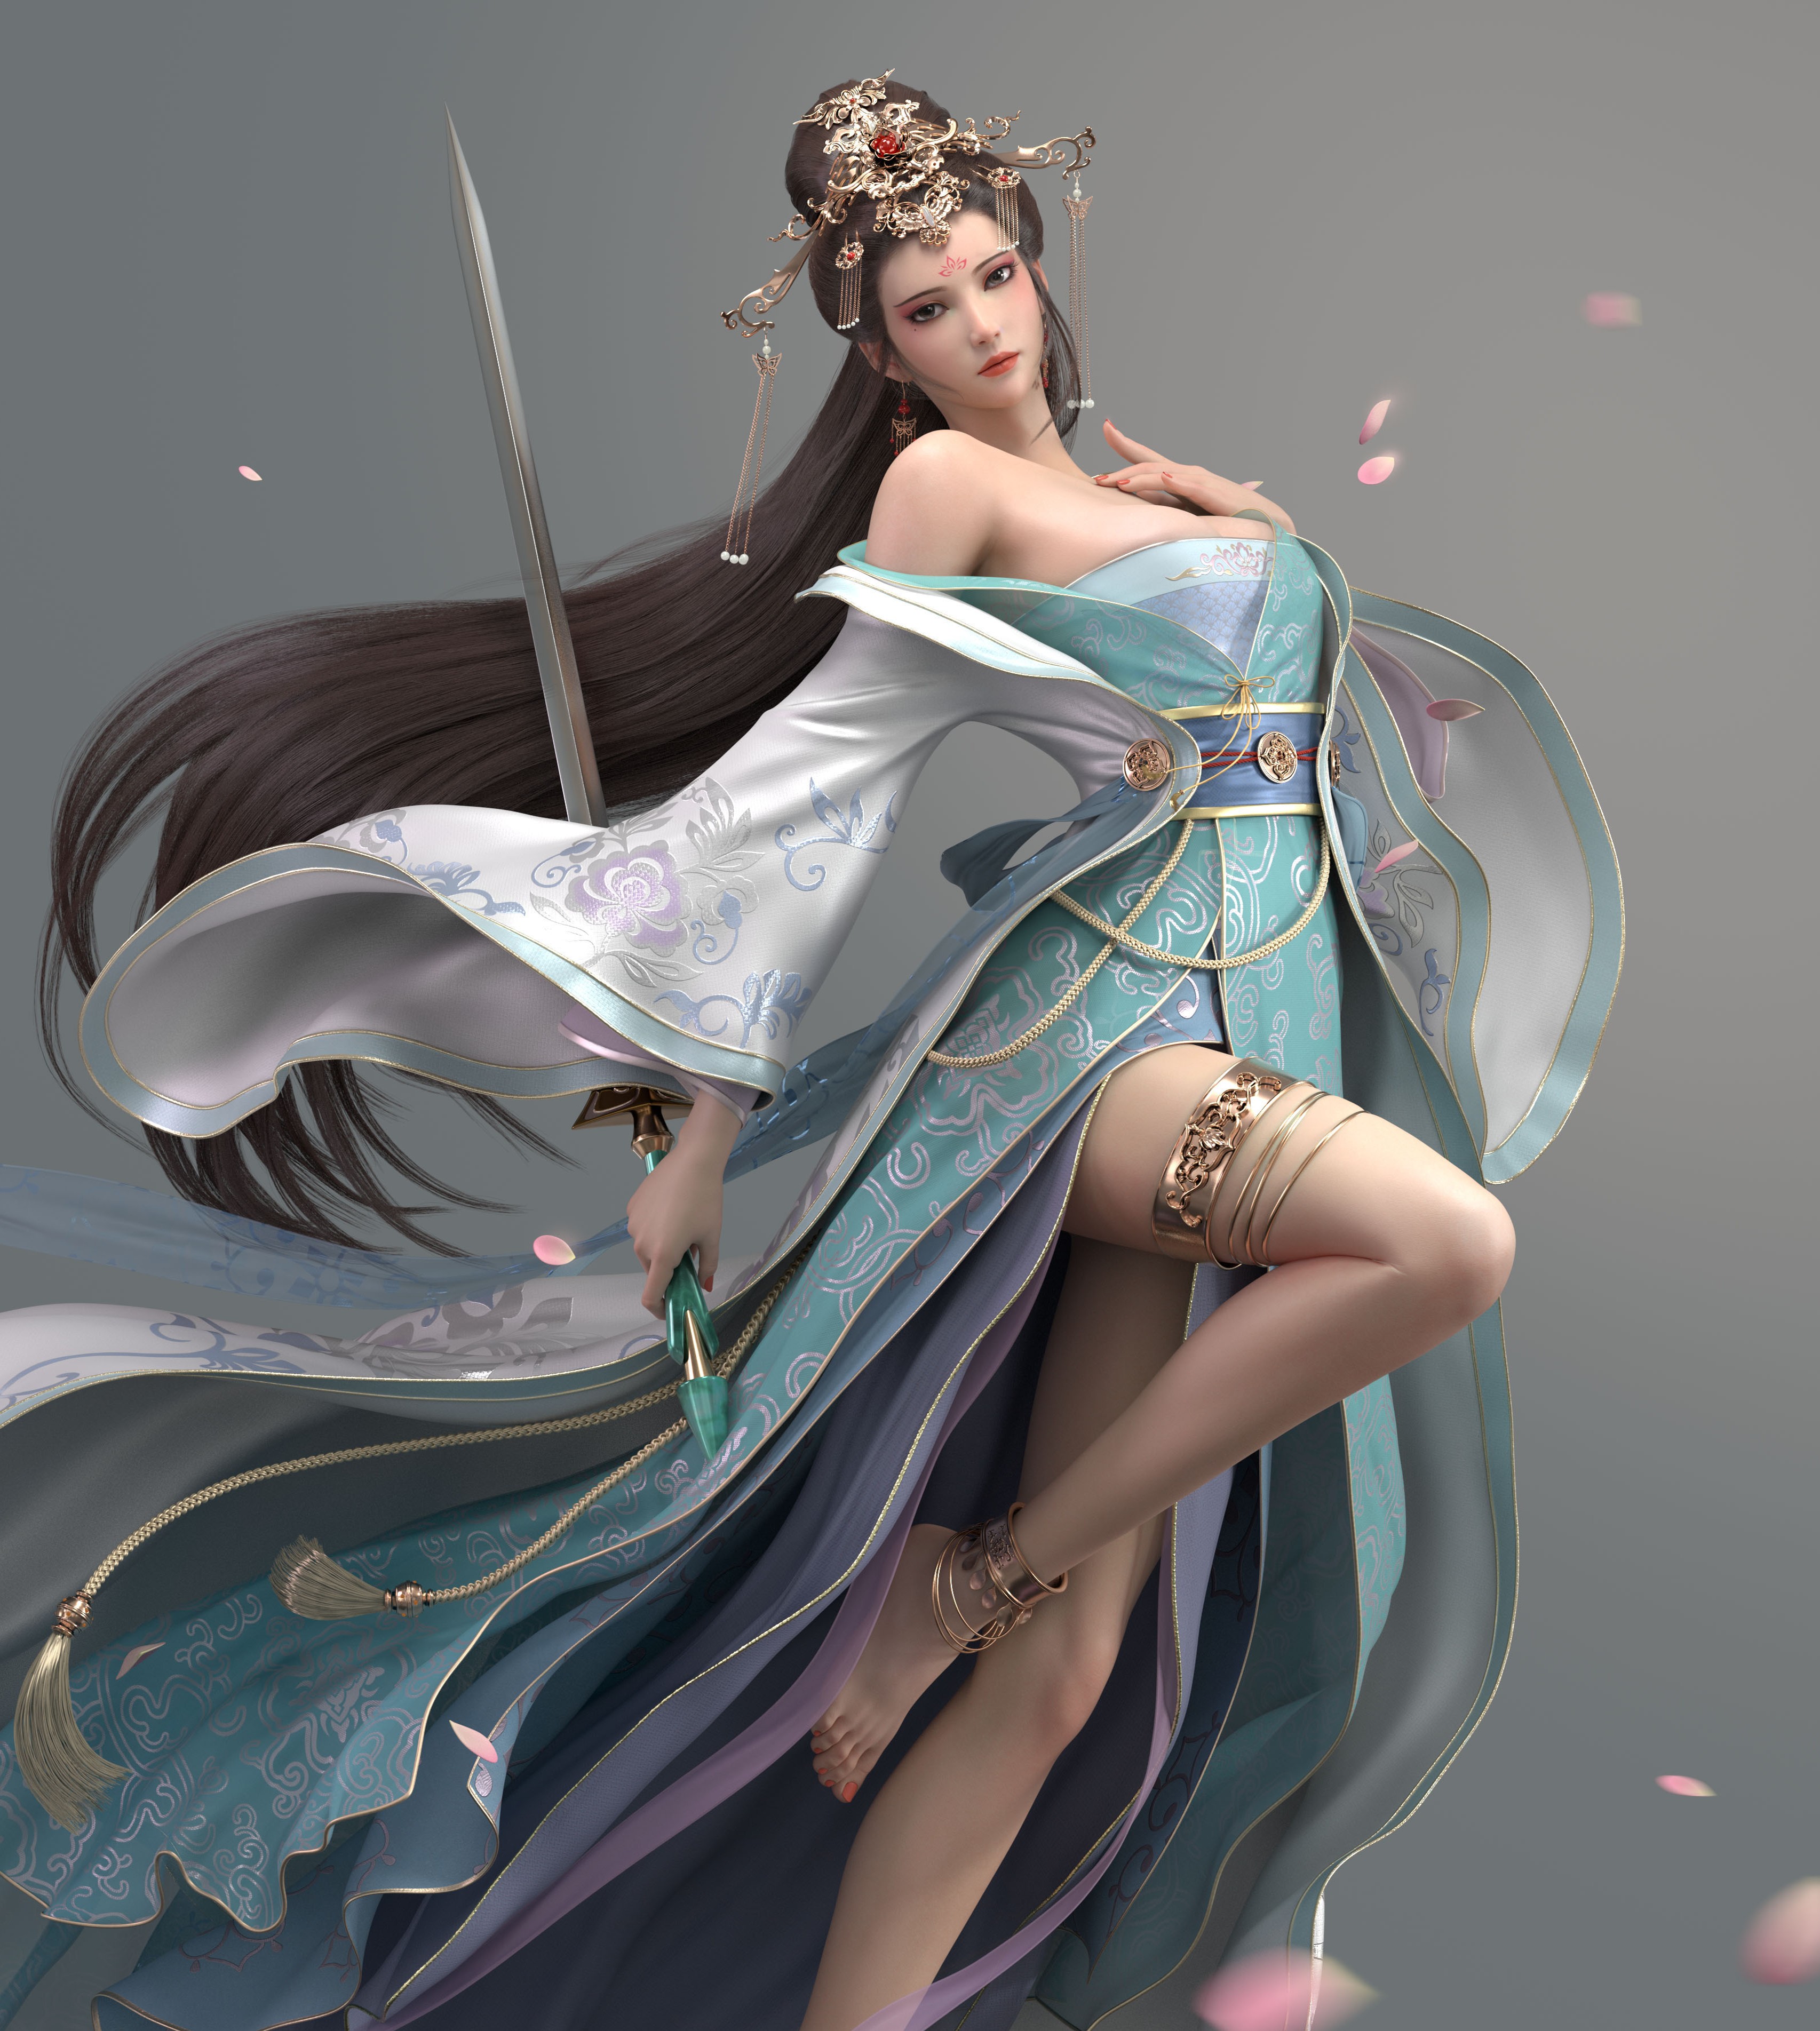 CGi Women Long Hair Petals Hair Accessories Weapon Sword Dress Loose Clothing Chinese Dress 3411x3807